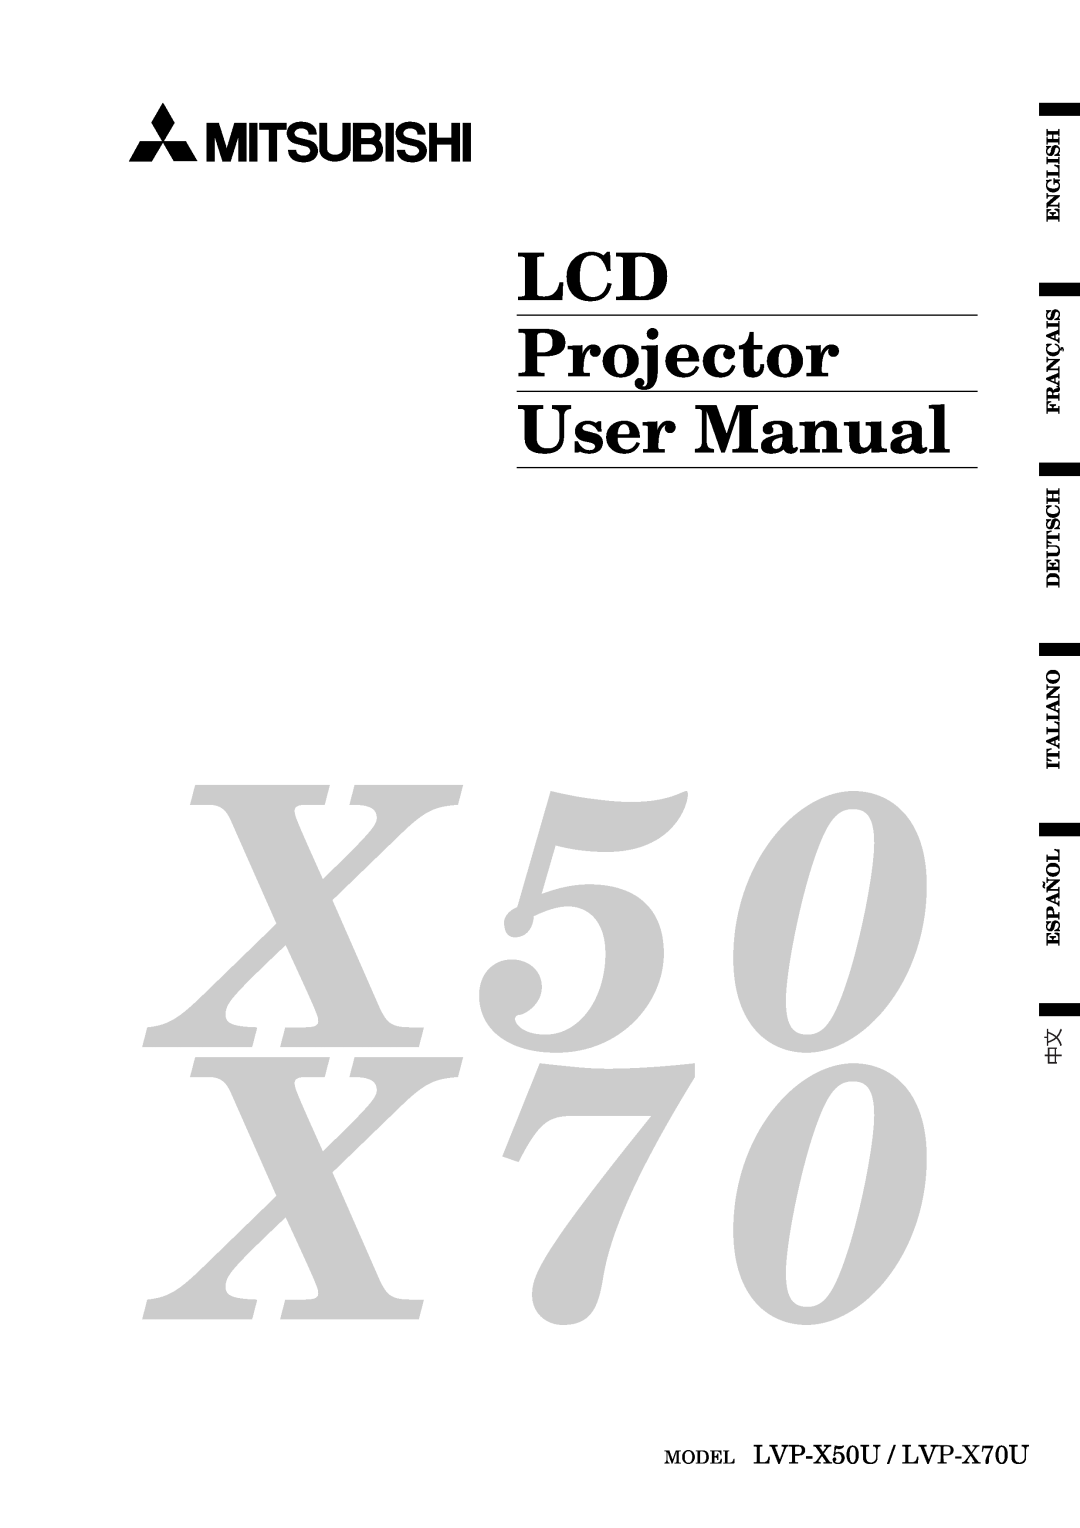 Mitsubishi Electronics user manual MODEL LVP-X50U / LVP-X70U, LCD Projector User Manual 